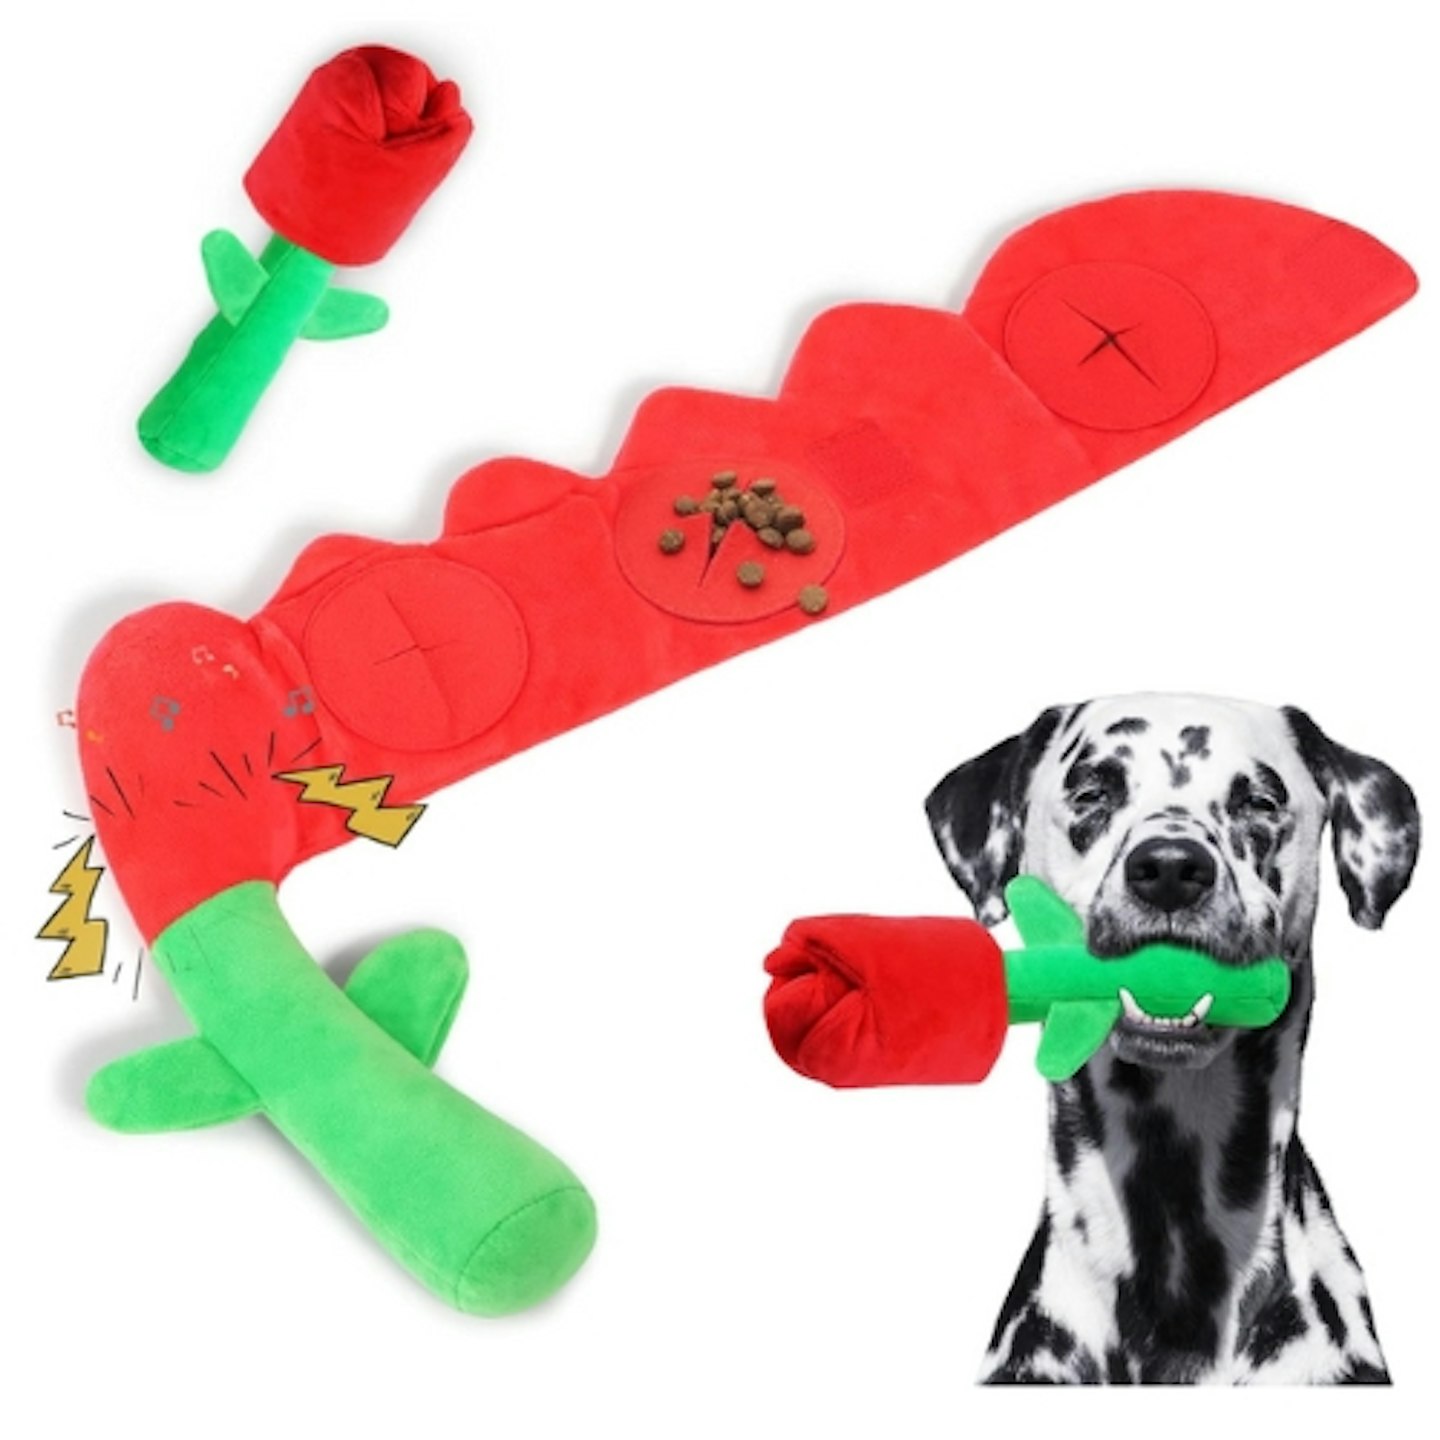 Twegin Dog Interactive Toys For Boredom (Rose)